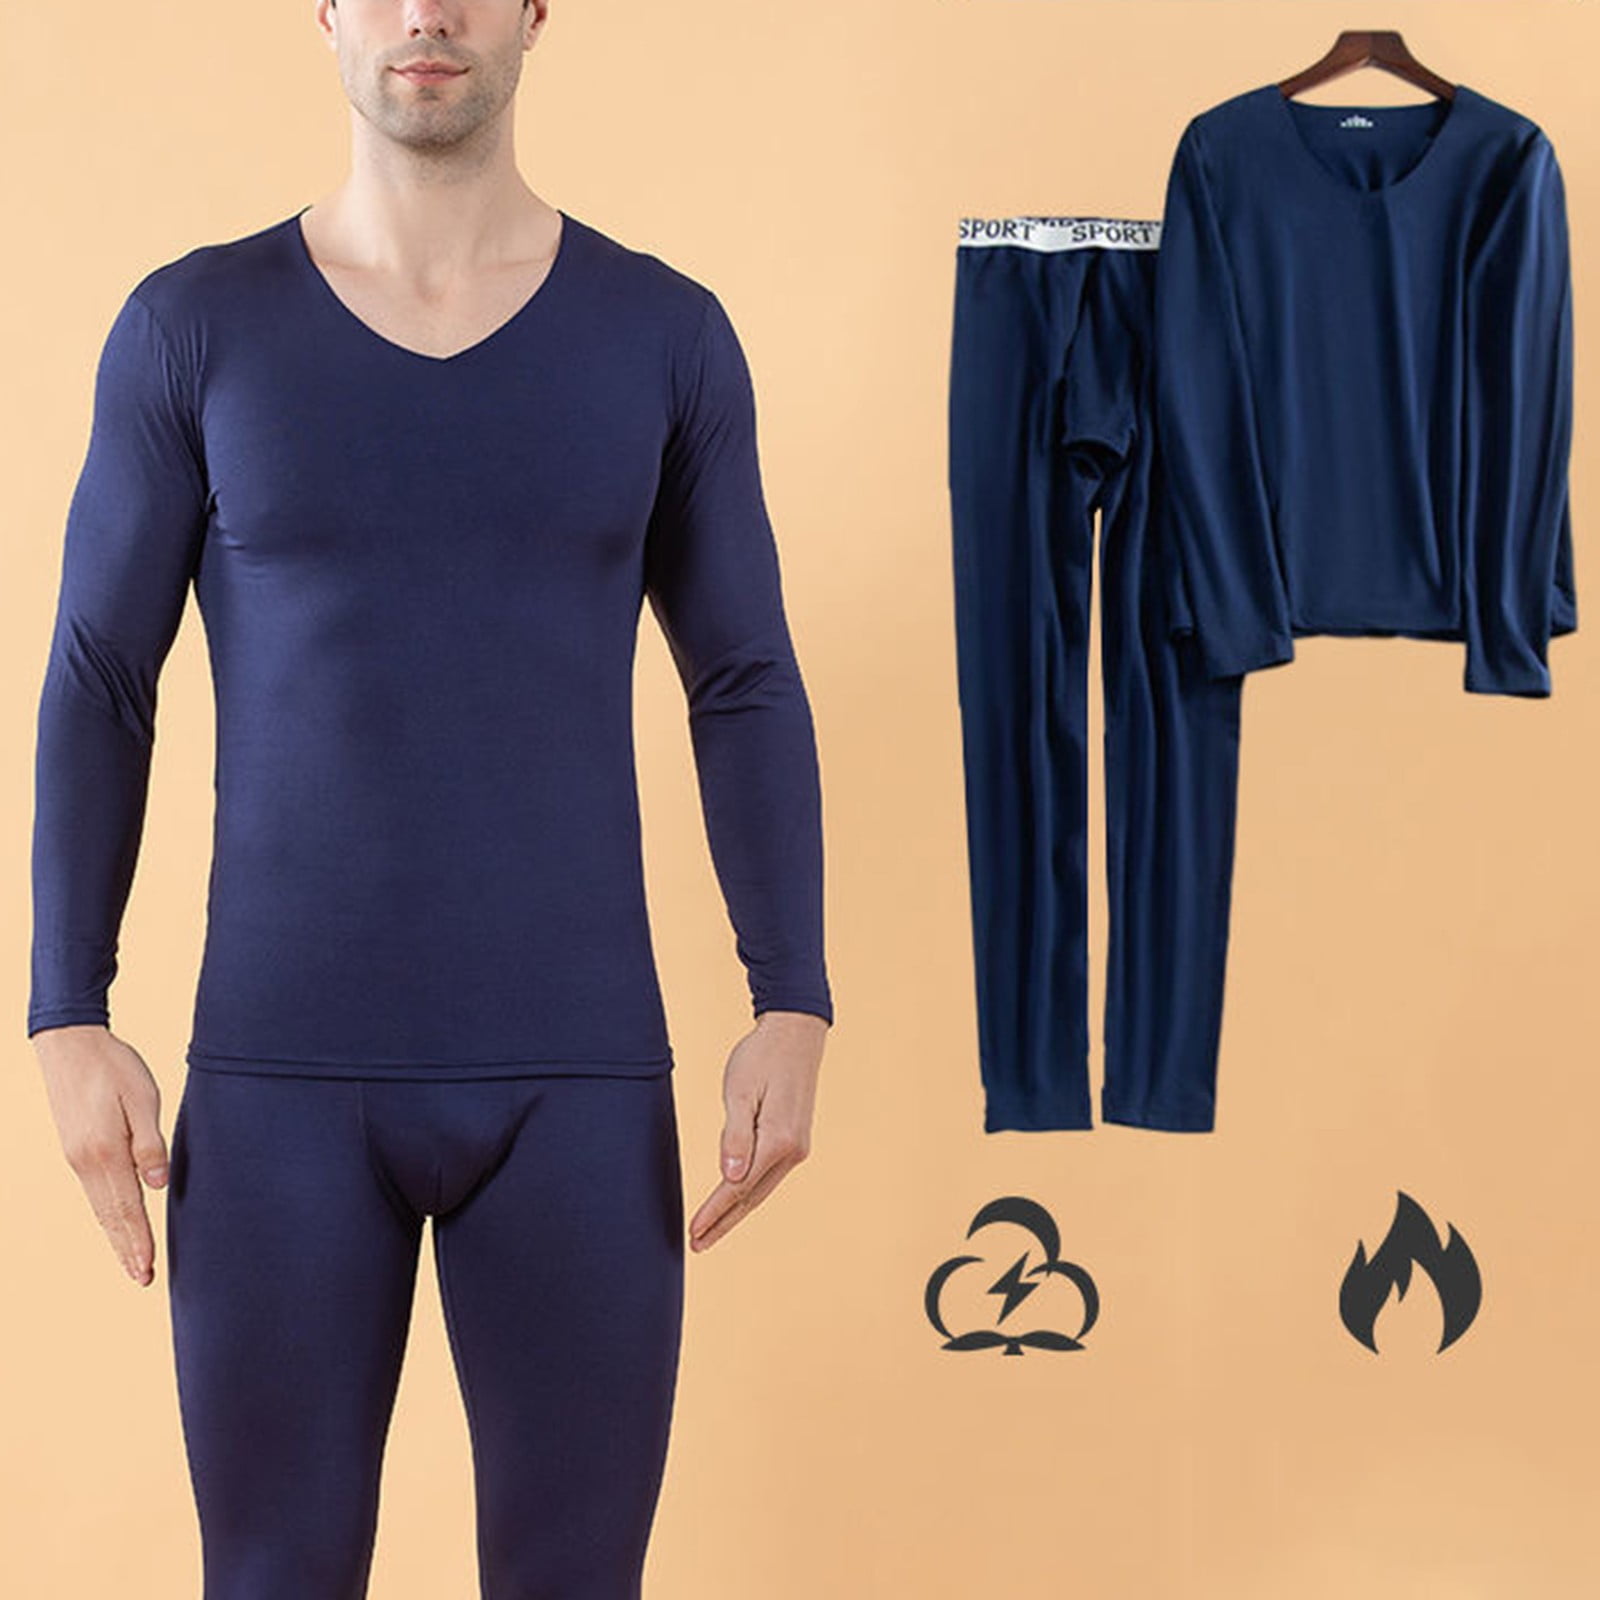 ZheElen Man Thermal Underwear Elastic Autumn Winter Home Office School  Outdoor Sleep Warm Tops Bottom Clothes Pant Suit for Male Red L Dark Blue  XXXL 